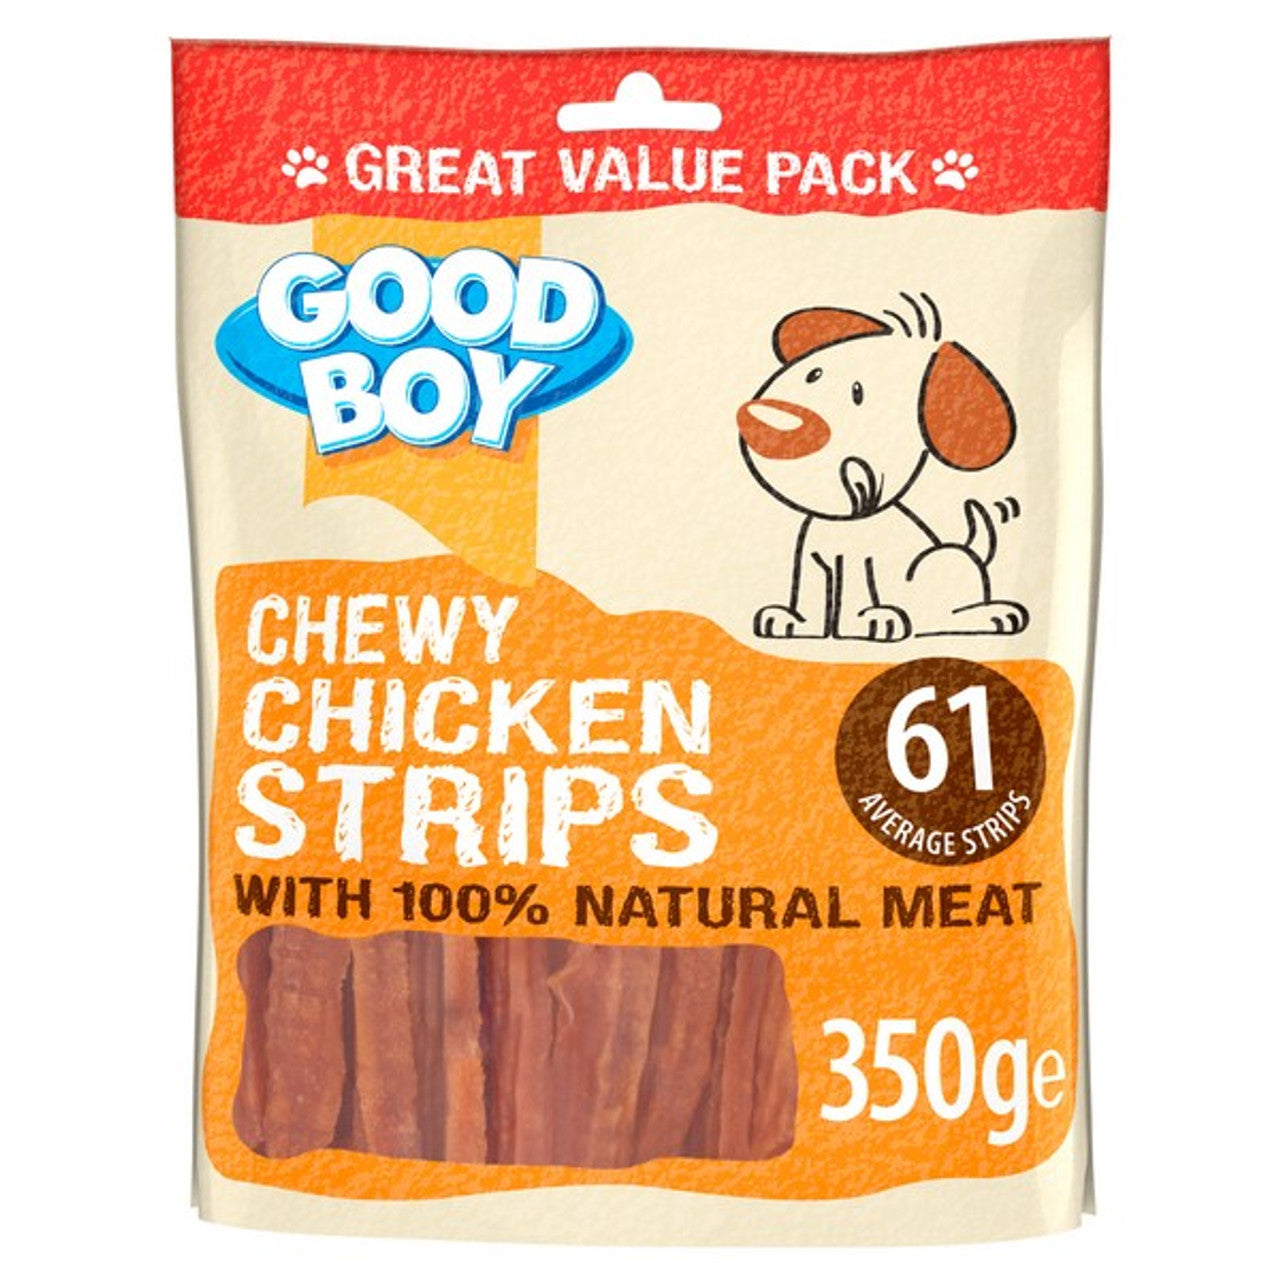 Good Boy Chewy Chicken Strips